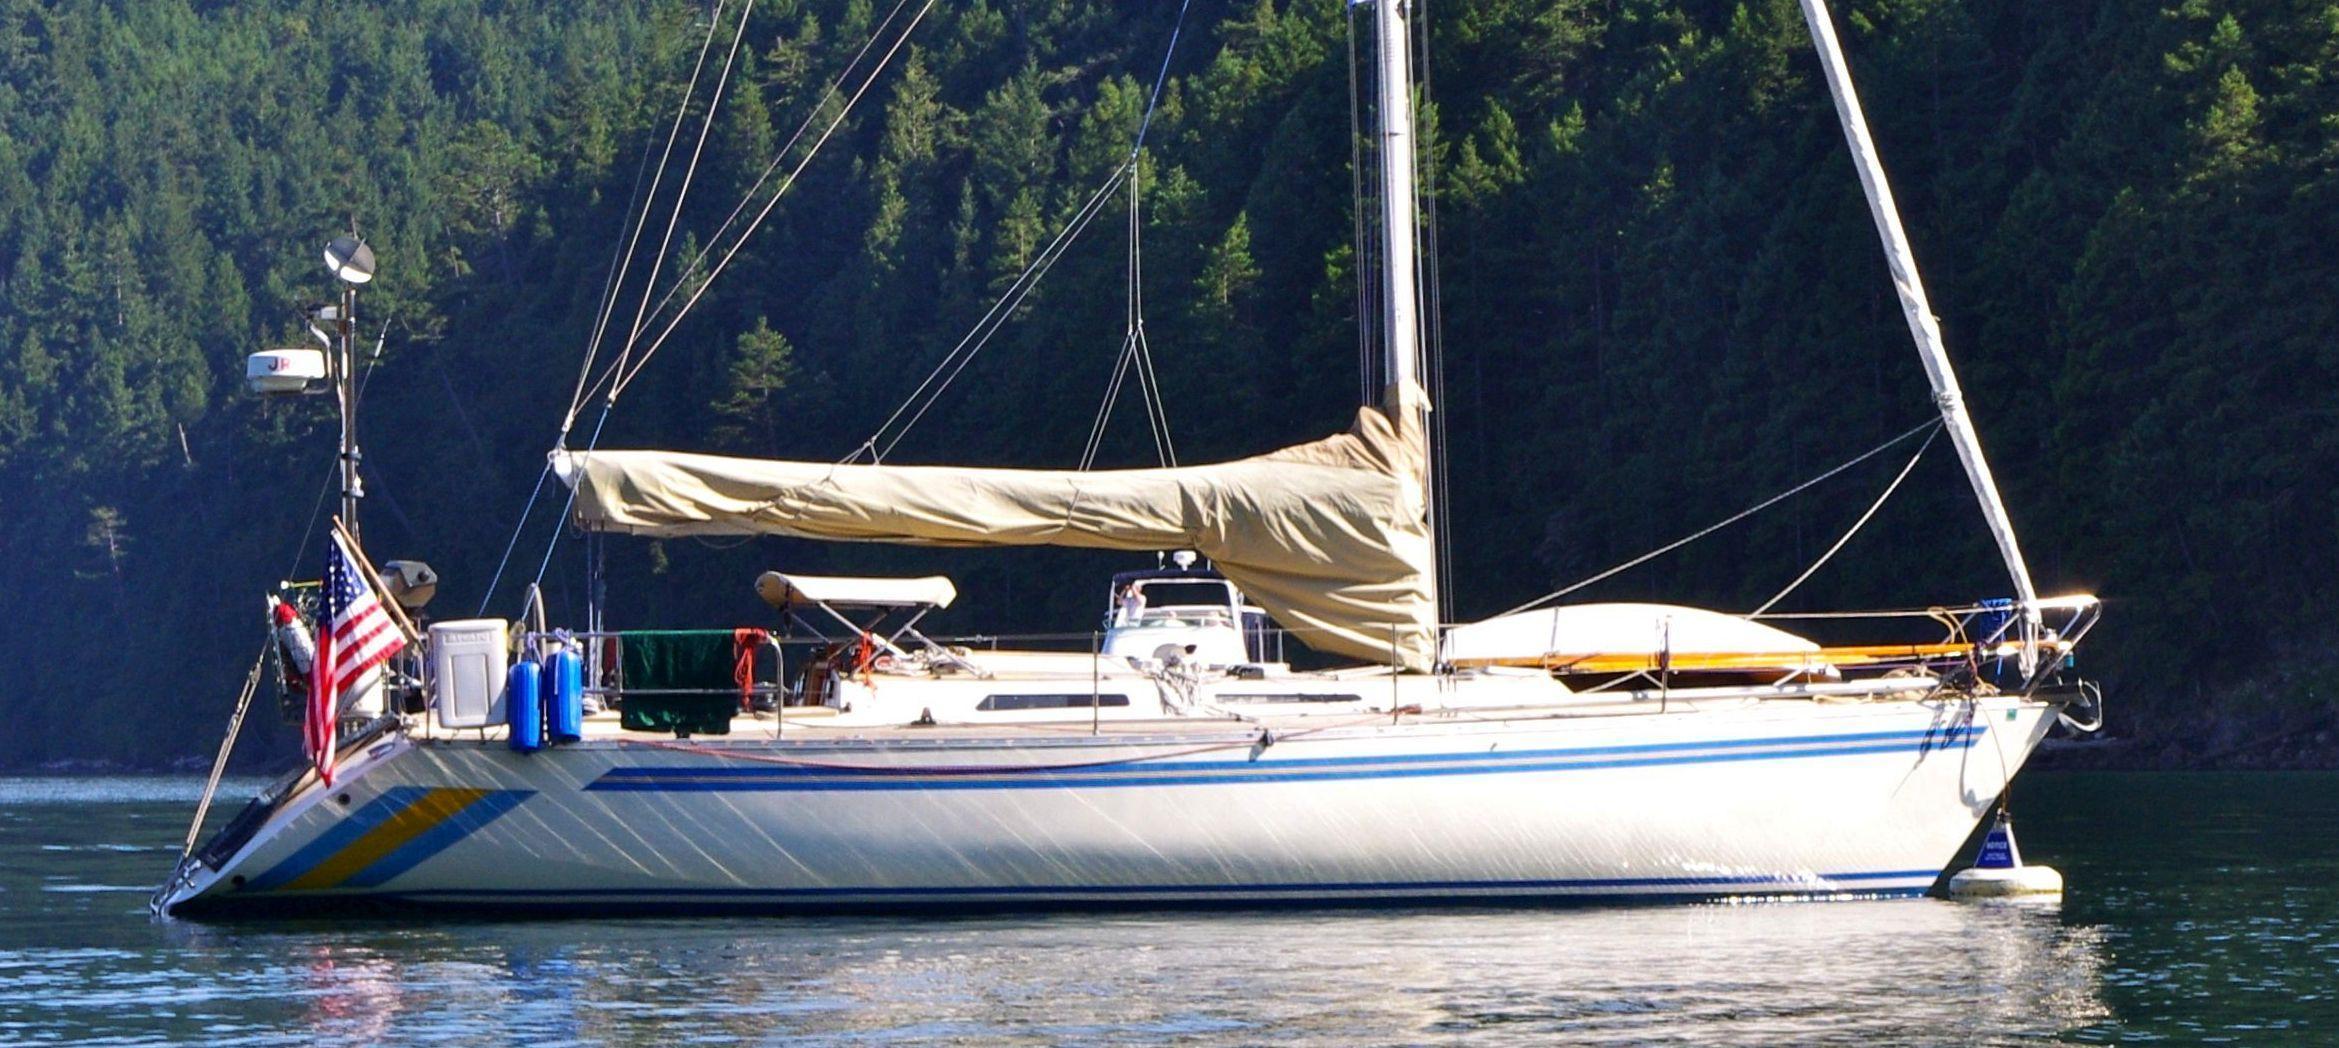 sa Yachts (Sn Style Cruiser/Racer), Seattle